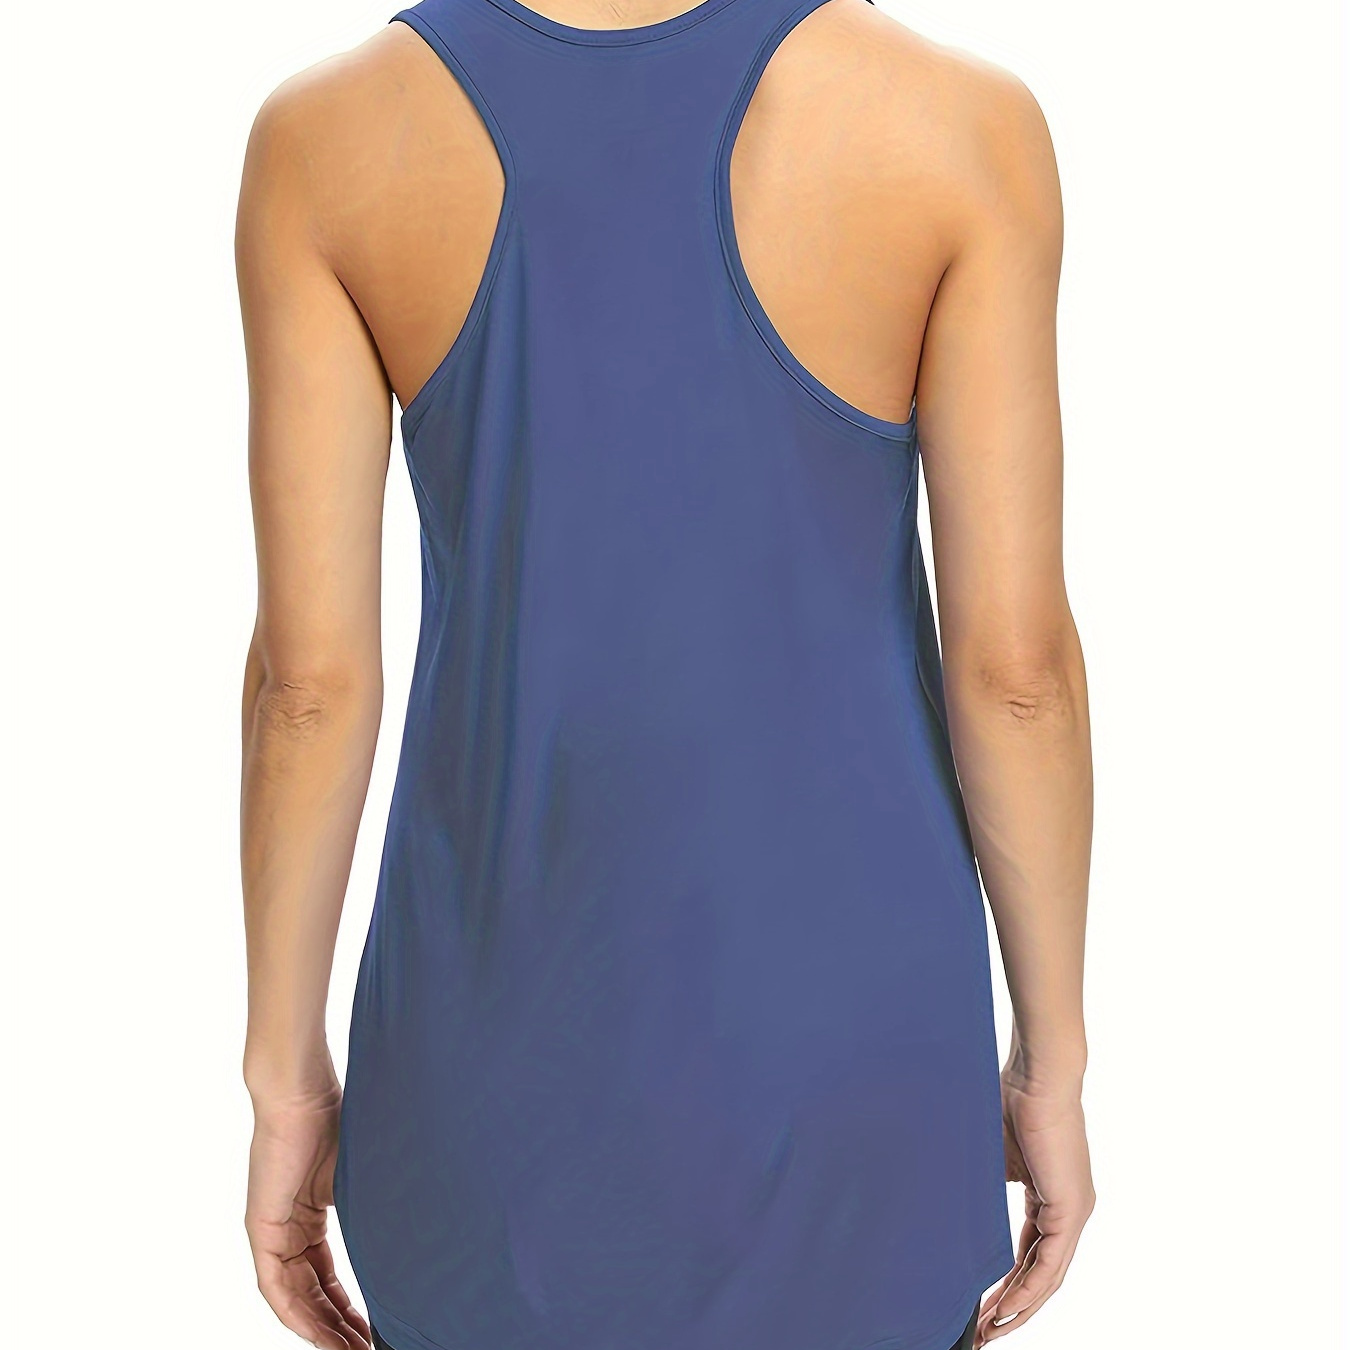 

Women's Long Tank Top For Fitness Yoga, Sporty Loose Racerback Sleeveless Shirt, Spring/summer